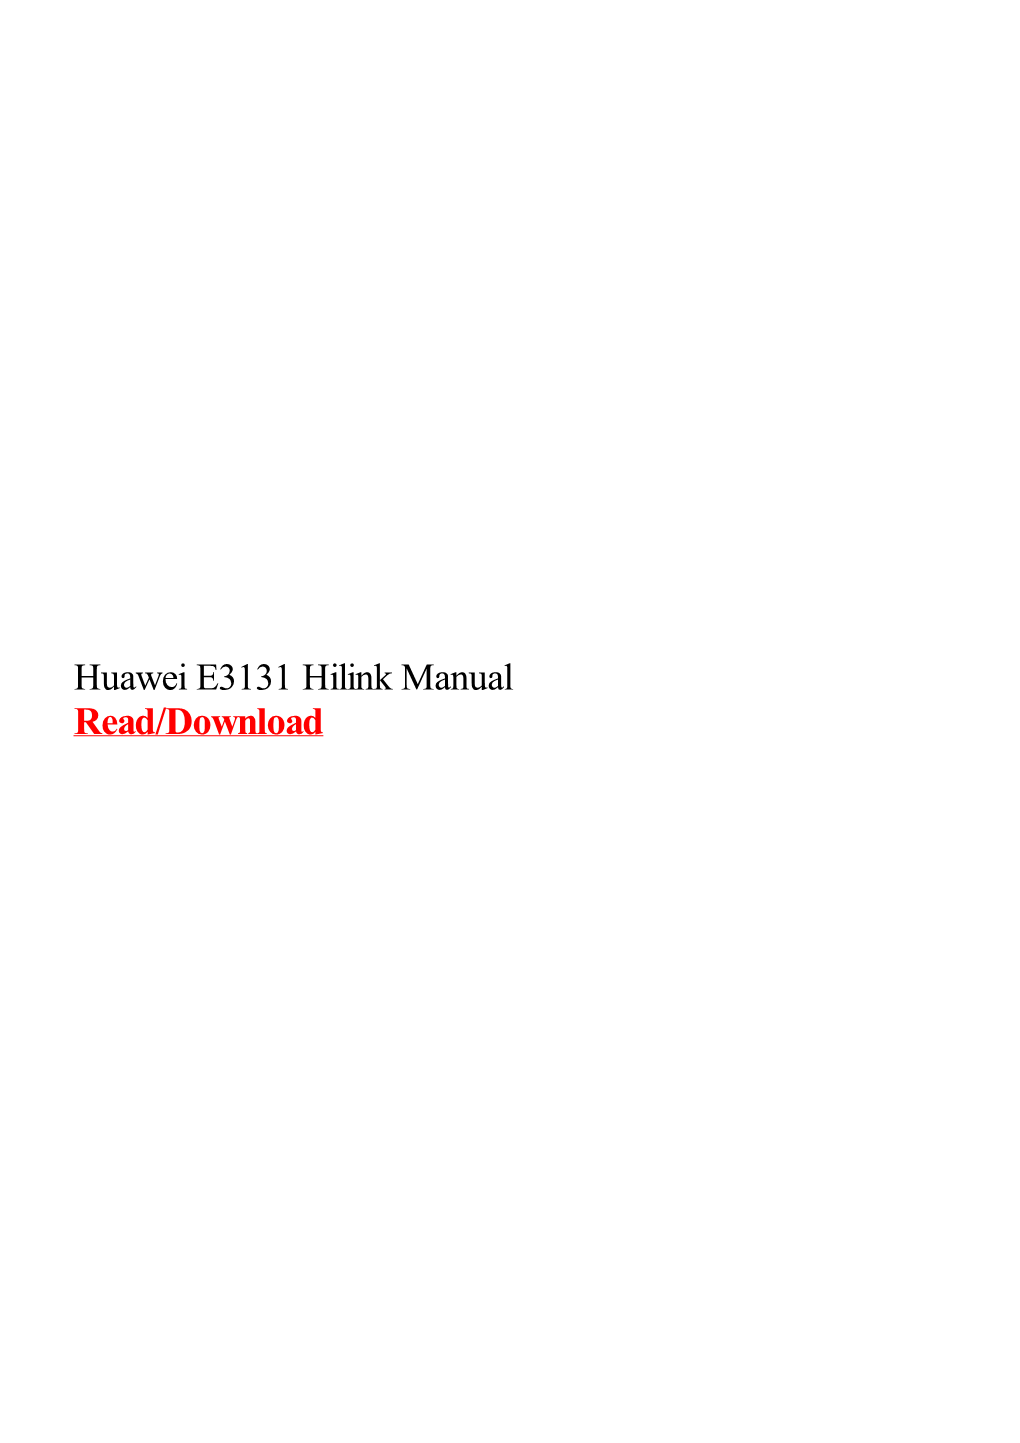 Huawei E3131 Hilink Manual